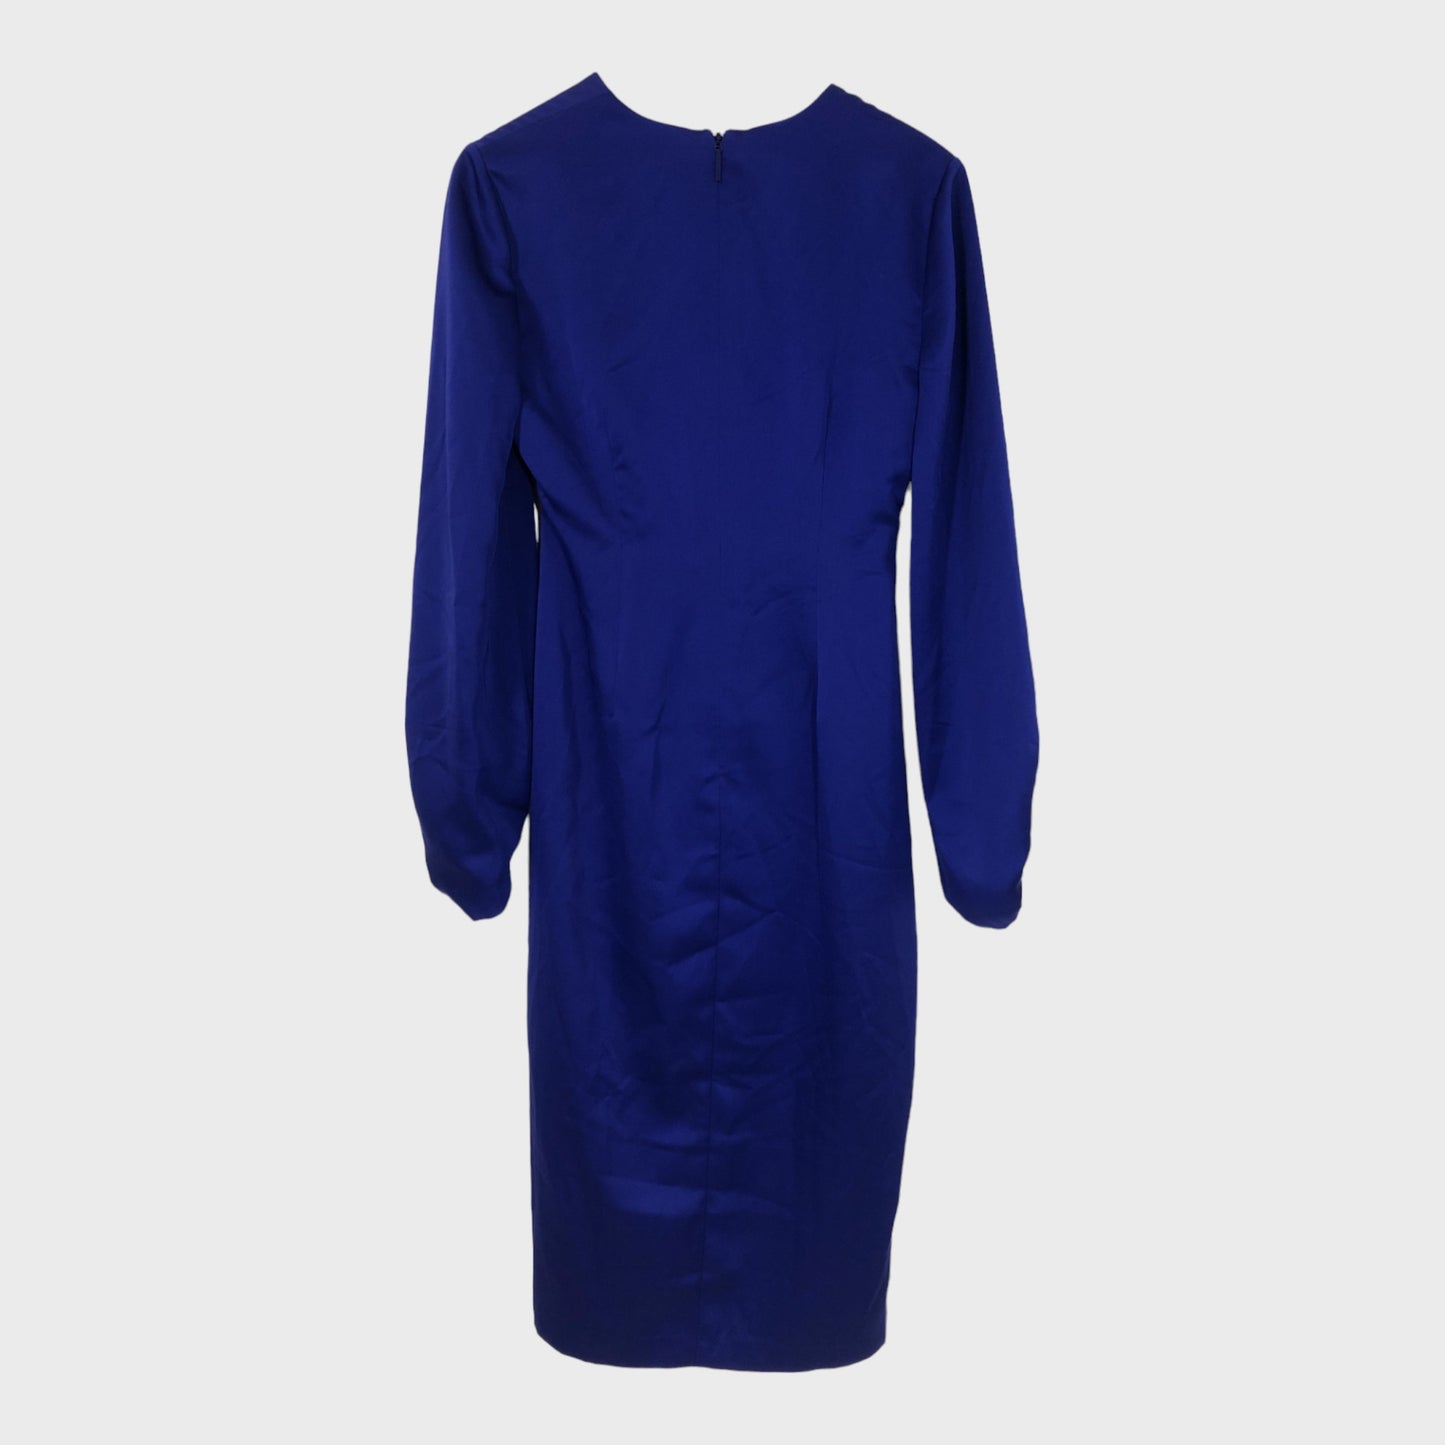 Designer Low Cowl Neck Purple Dress